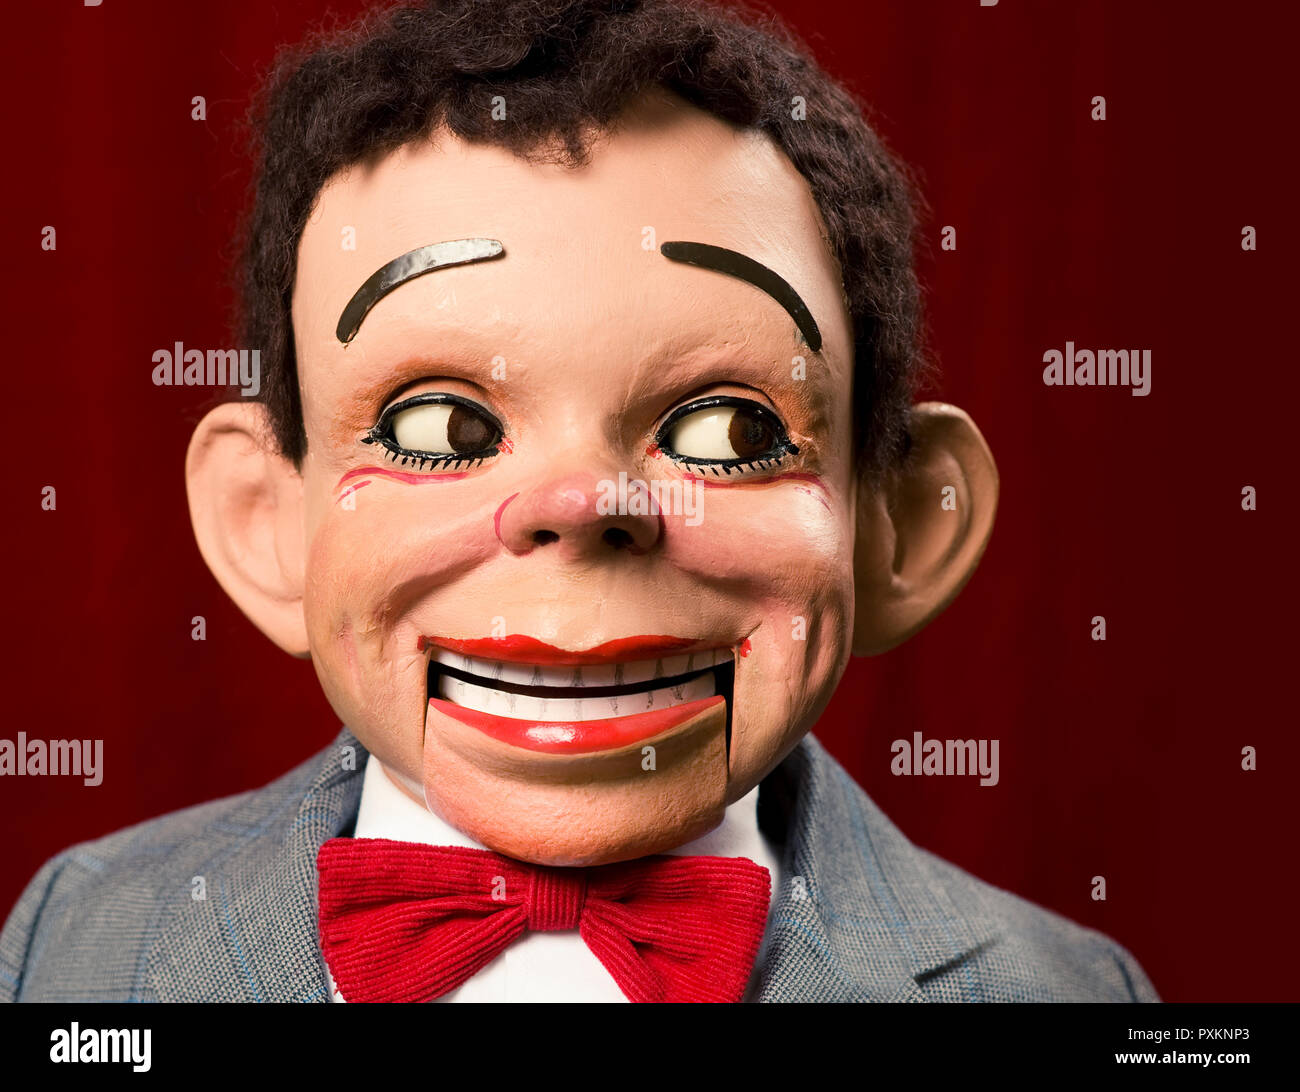 A ventriloquist dummy Stock Photo - Alamy